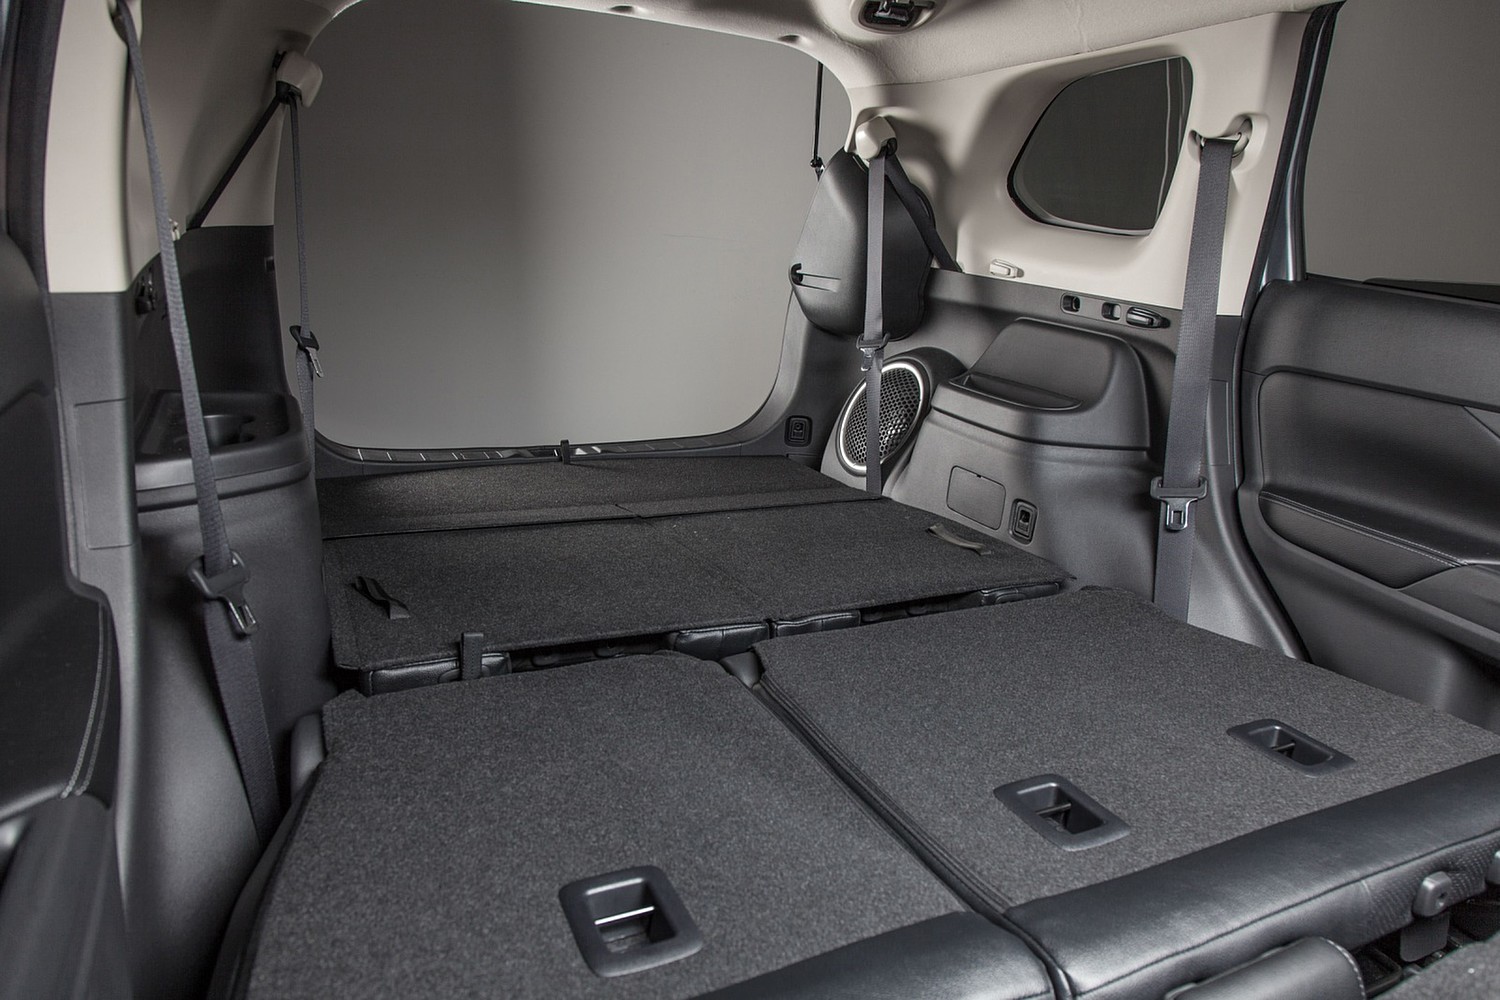 Mitsubishi Outlander GT 4dr SUV Interior (2014 model year shown)